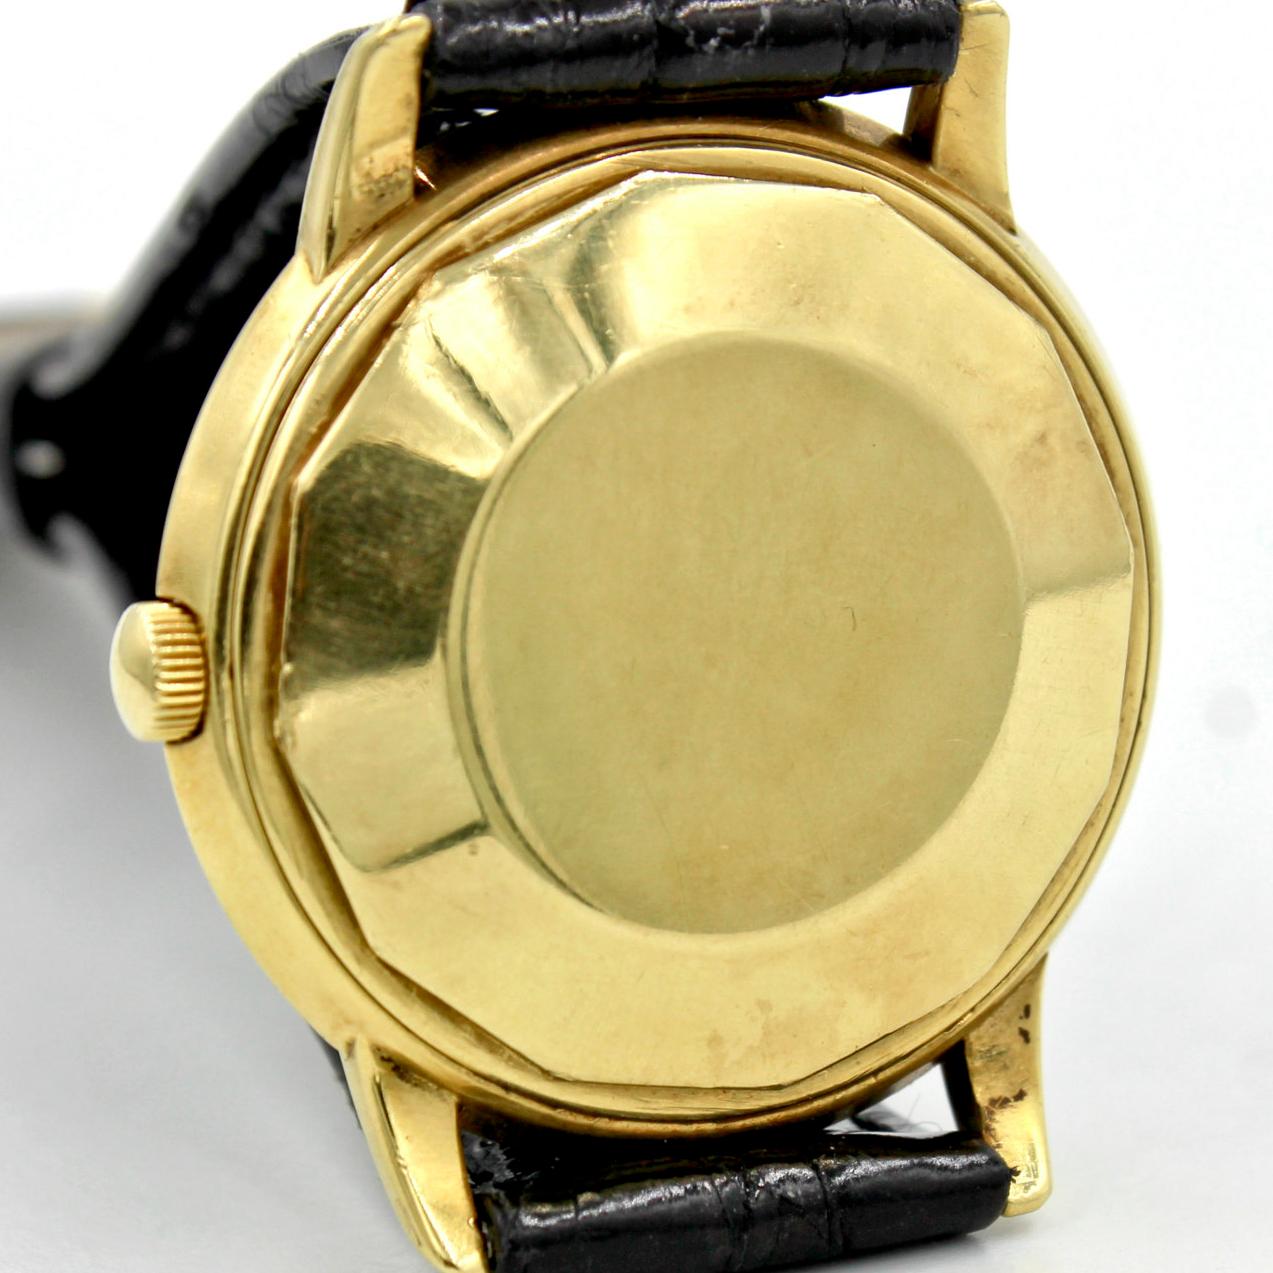 Vacheron Constantin 18 Karat Yellow Gold Men's Wrist Watch with Textured Dial In Fair Condition For Sale In Fort Lauderdale, FL